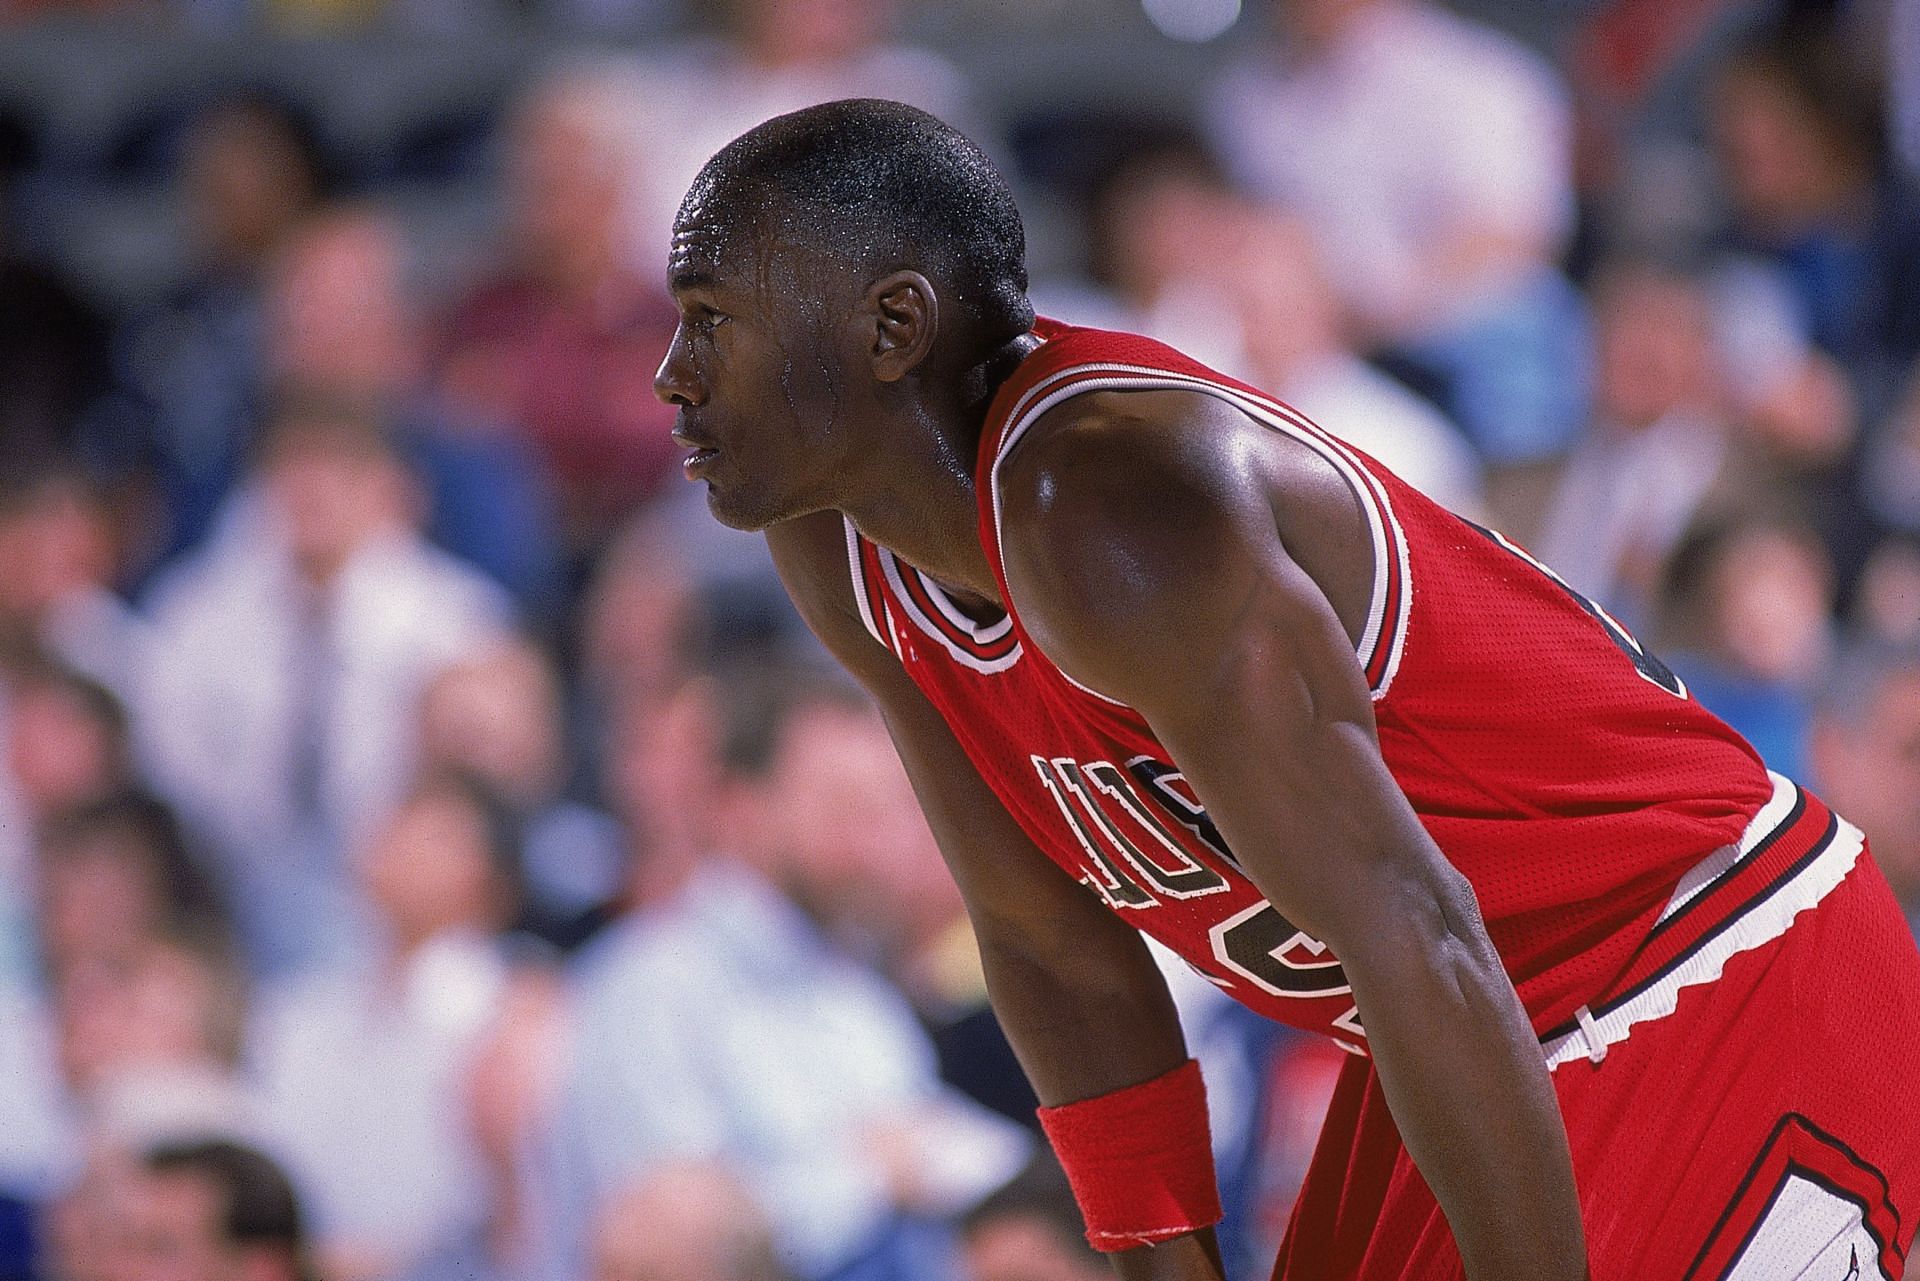 Michael Jordan in action for the Chicago Bulls.